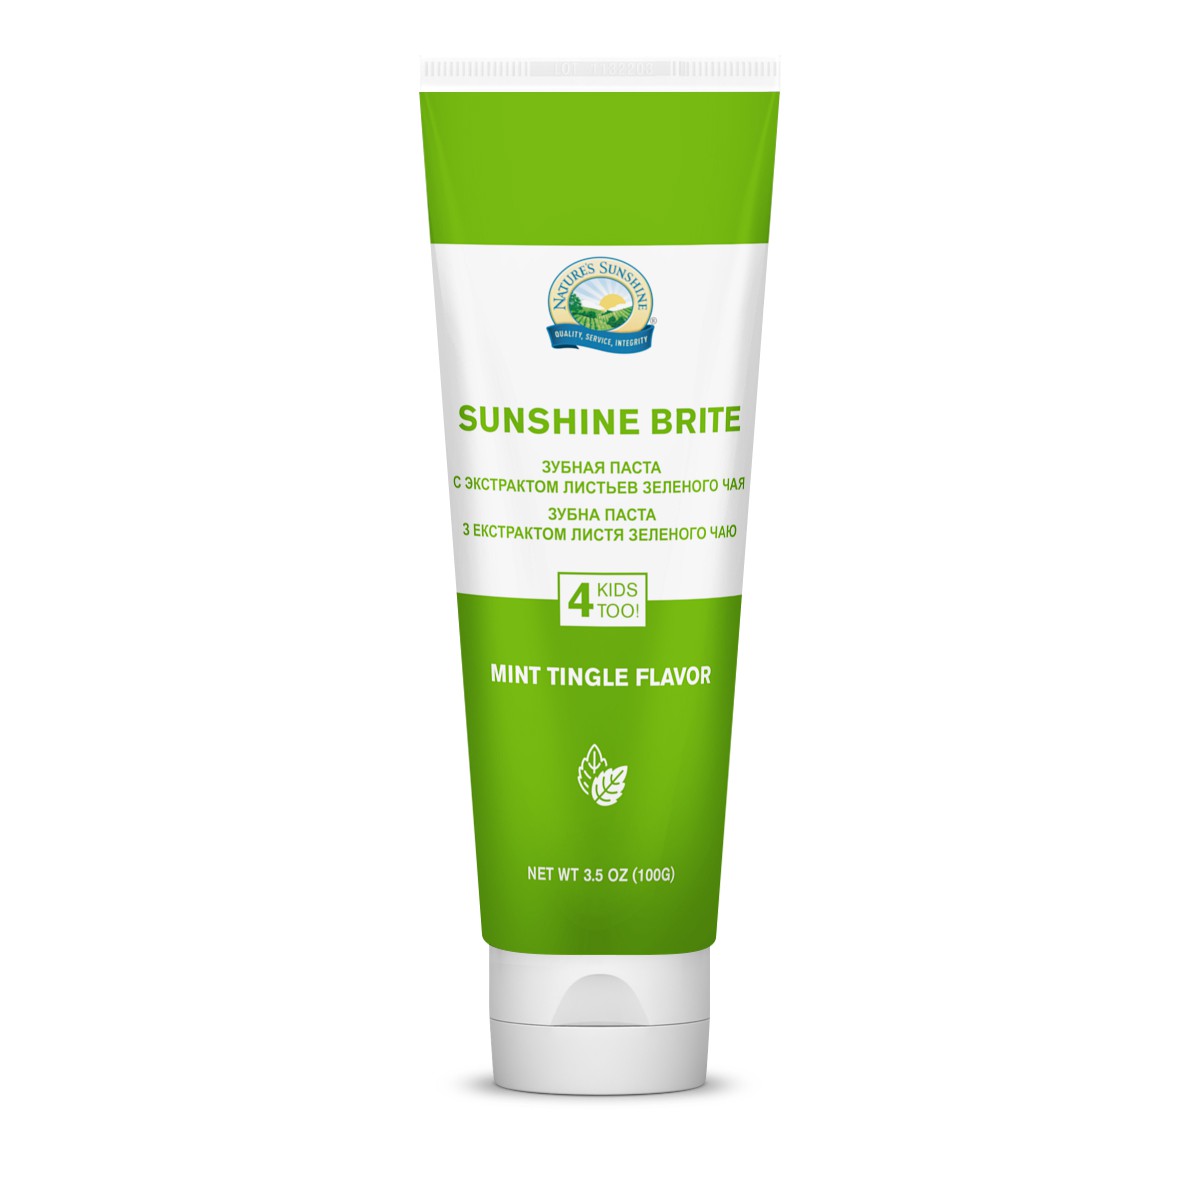 Sunshine Brite Toothpaste* - Саншайн Брайт зубная паста* - БАД Nature's Sunshine Products (NSP)